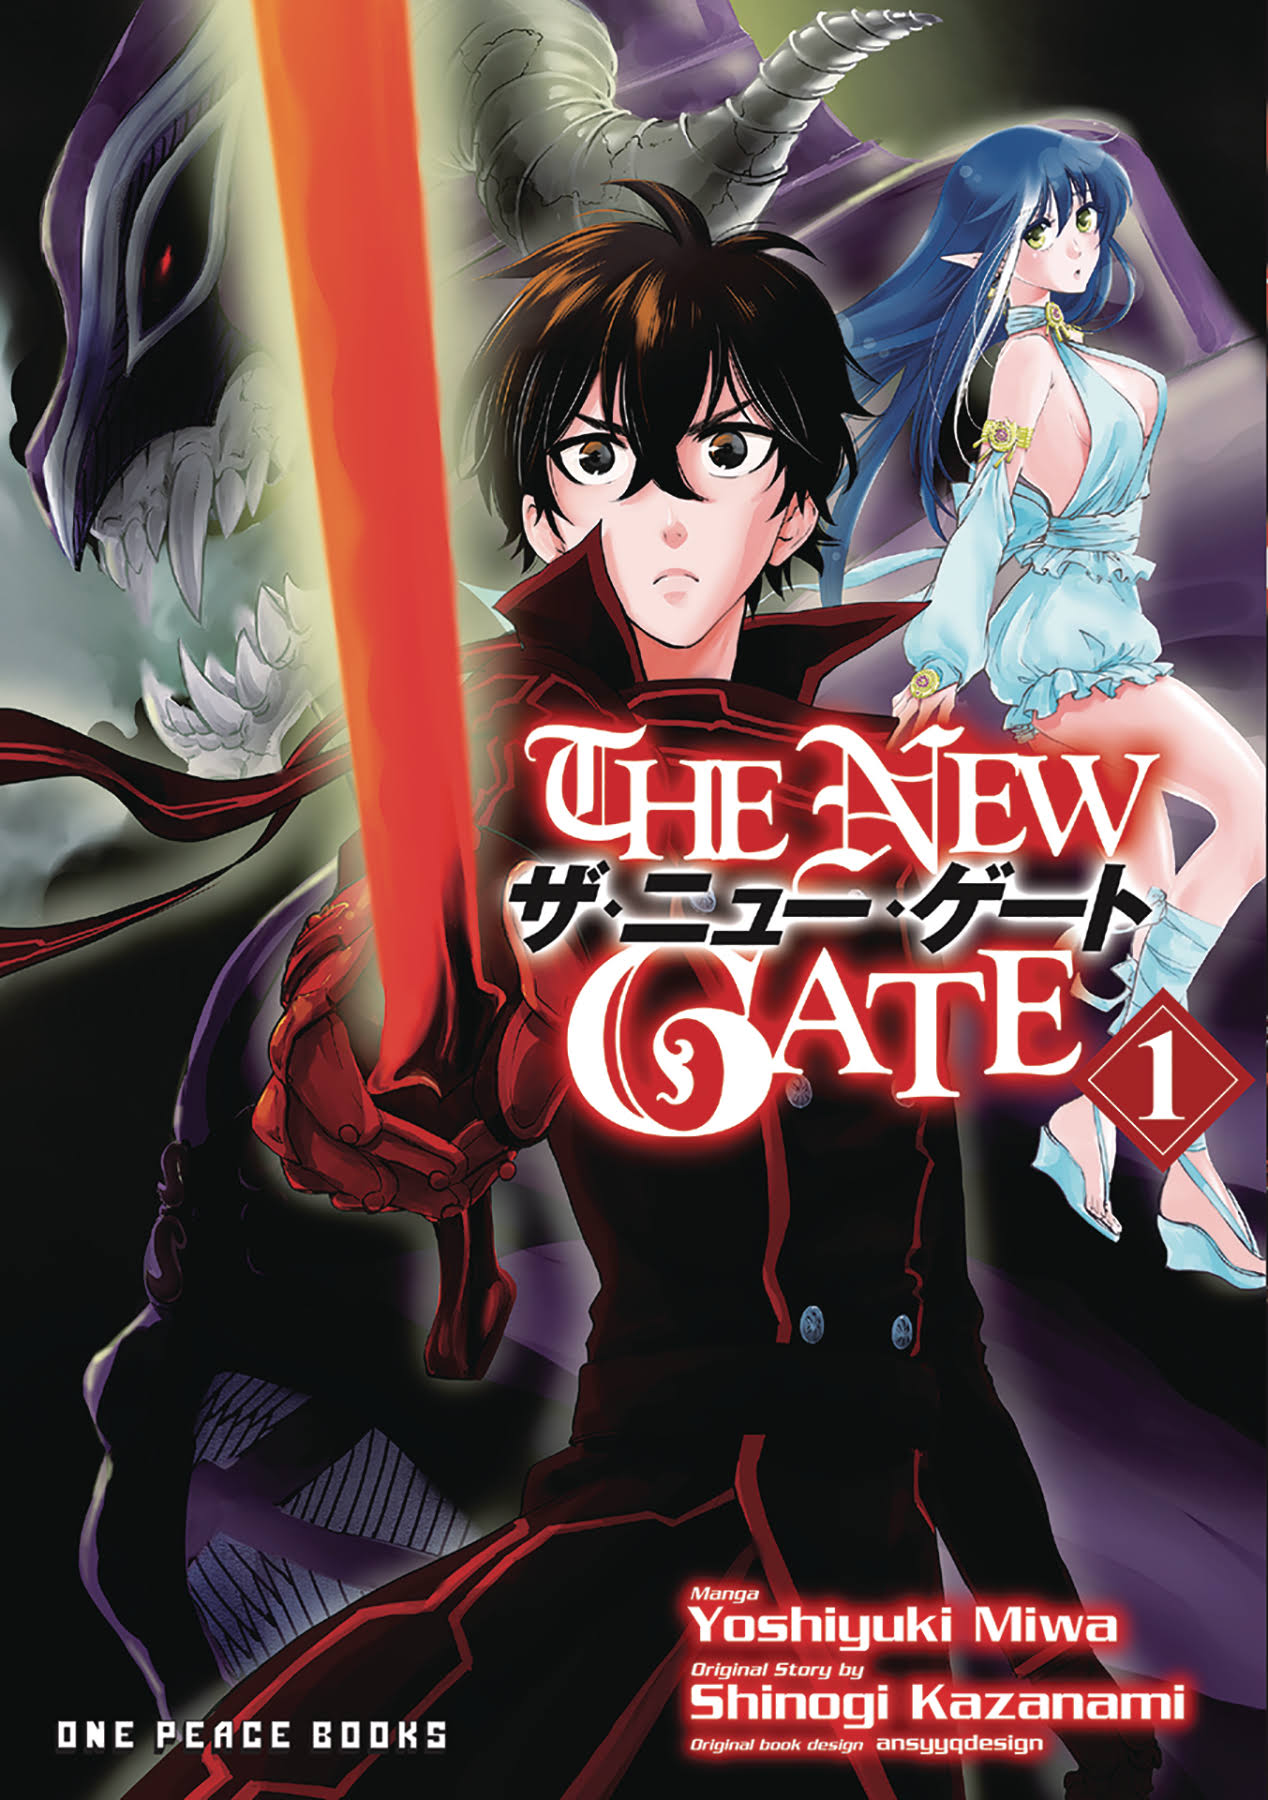 The New Gate Volume 1 by Yoshiyuki Miwa